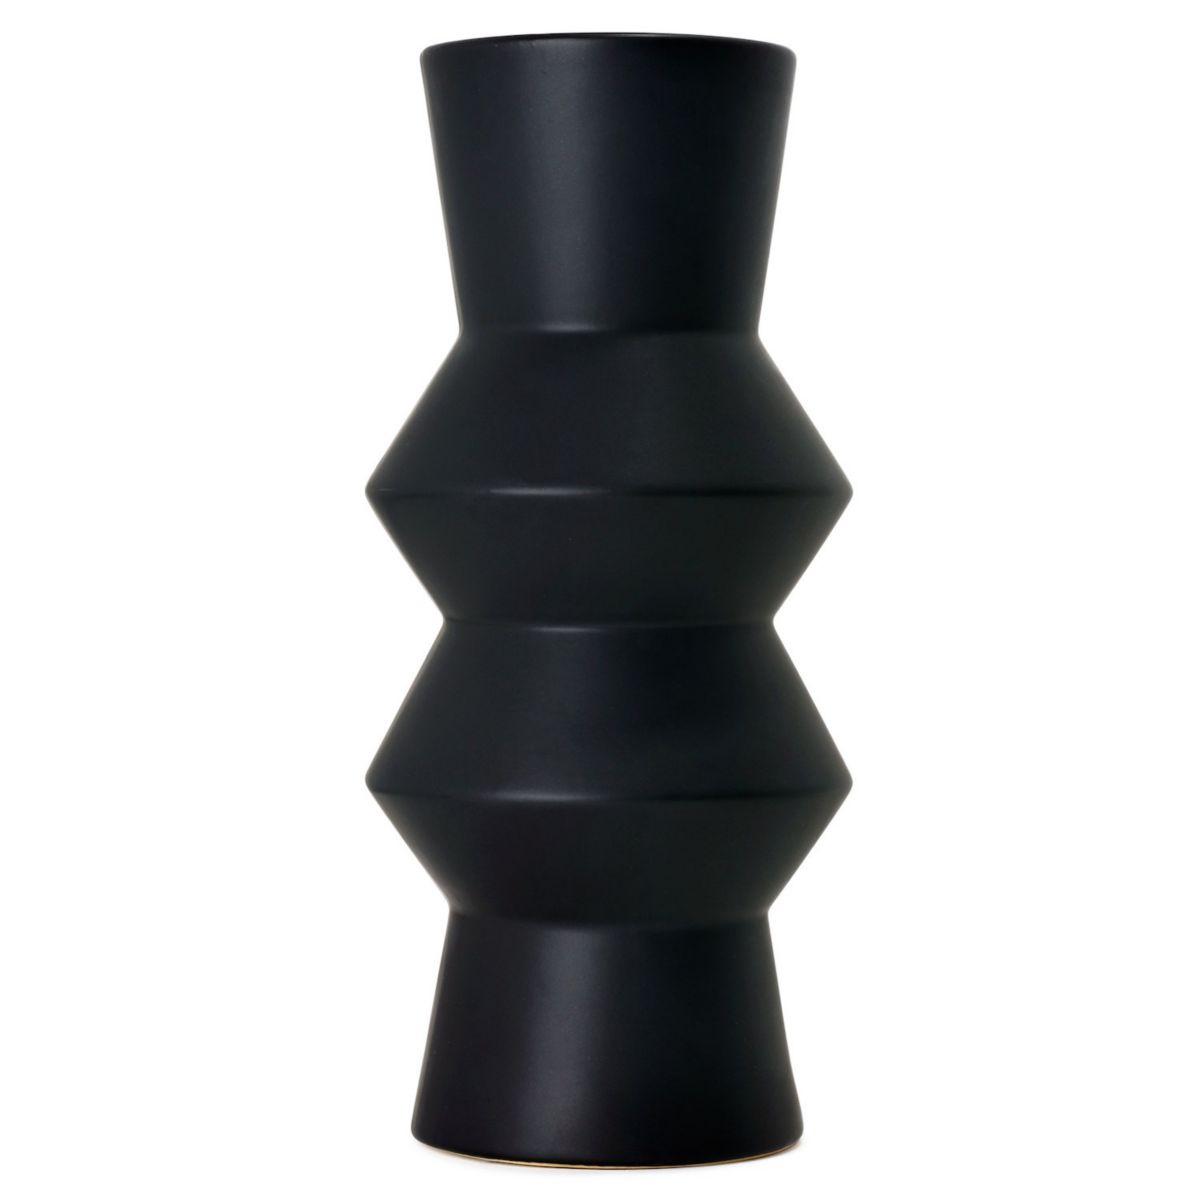 American Art Decor Contemporary Black Geometric Ceramic Vase Table Decor American Art Décor